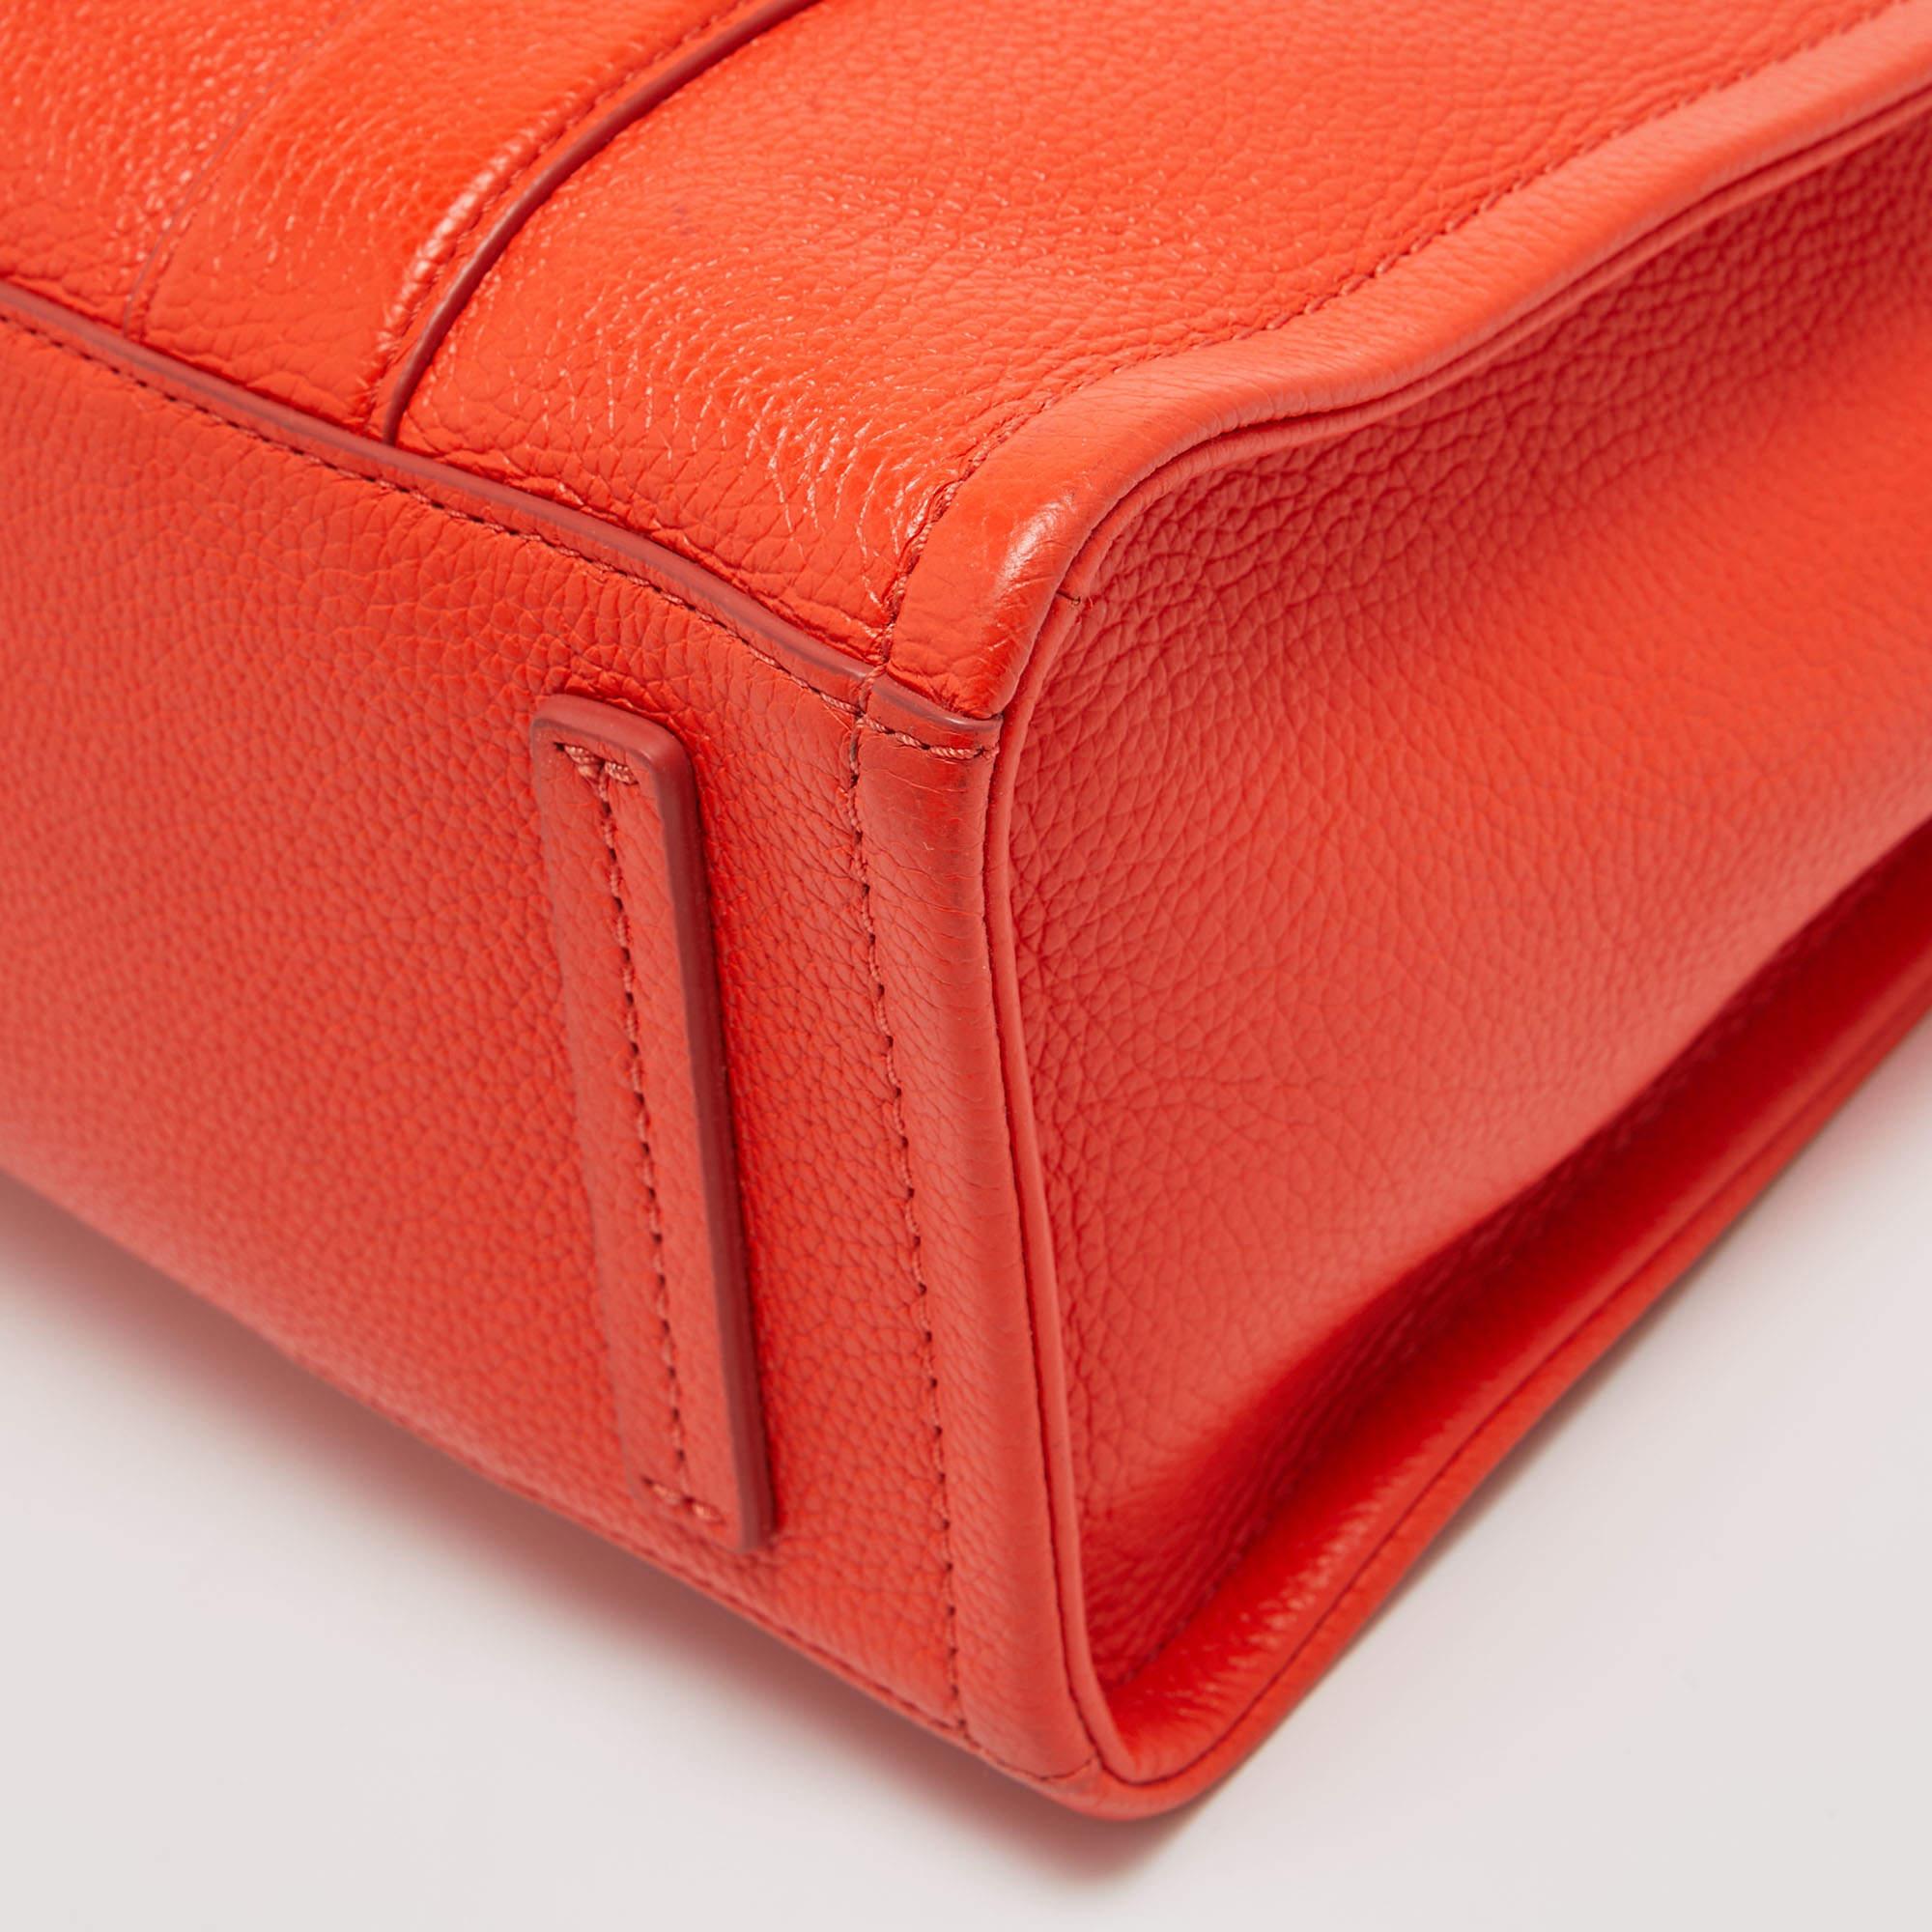 Marc Jacobs Orange Leather Medium The Tote Bag In Good Condition For Sale In Dubai, Al Qouz 2